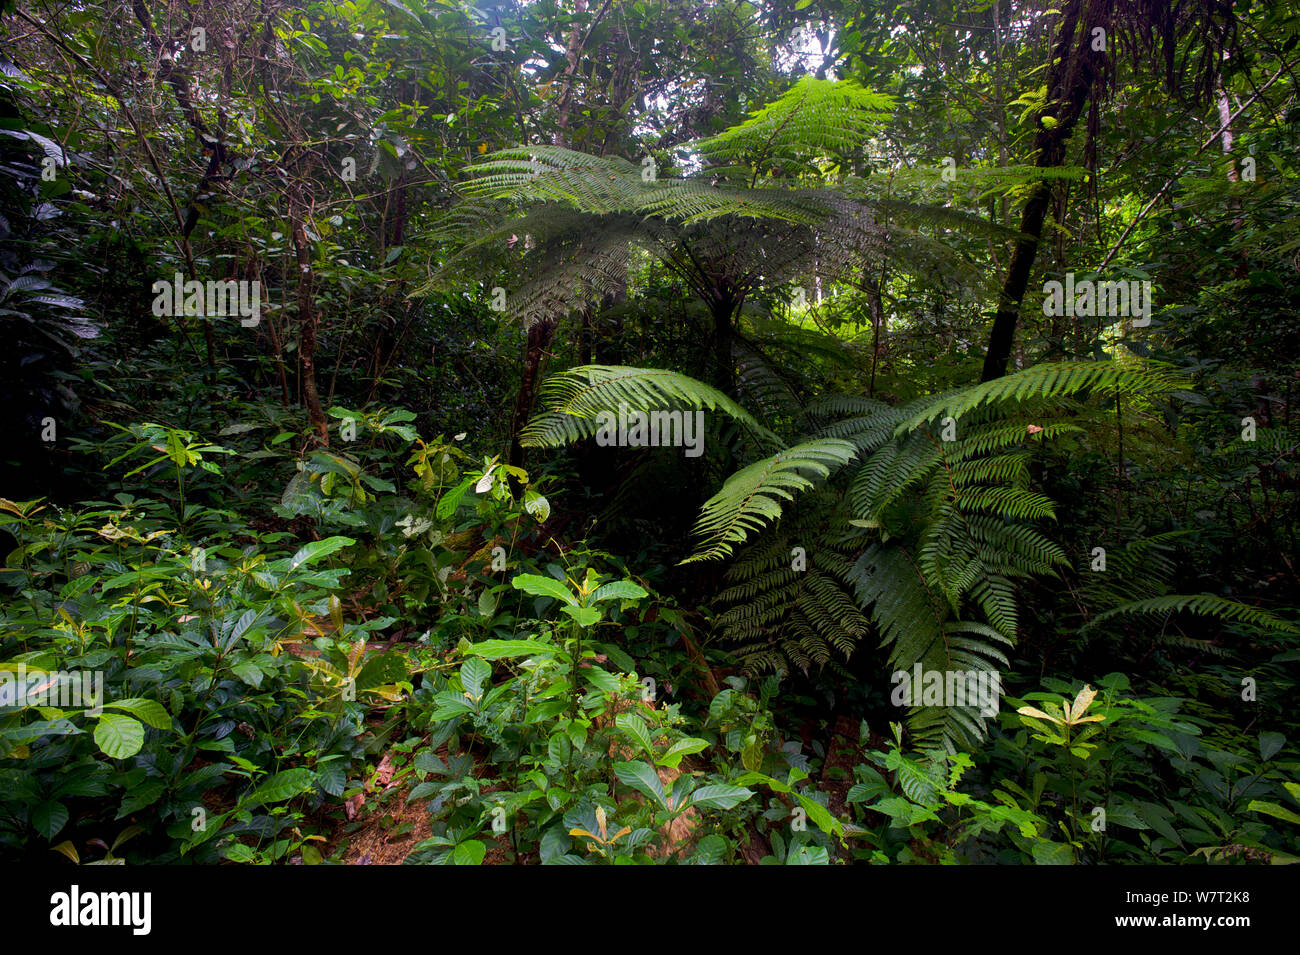 Tree fern (Cyathea manniana) in the Atewa forest reserve, Ghana. Stock Photo